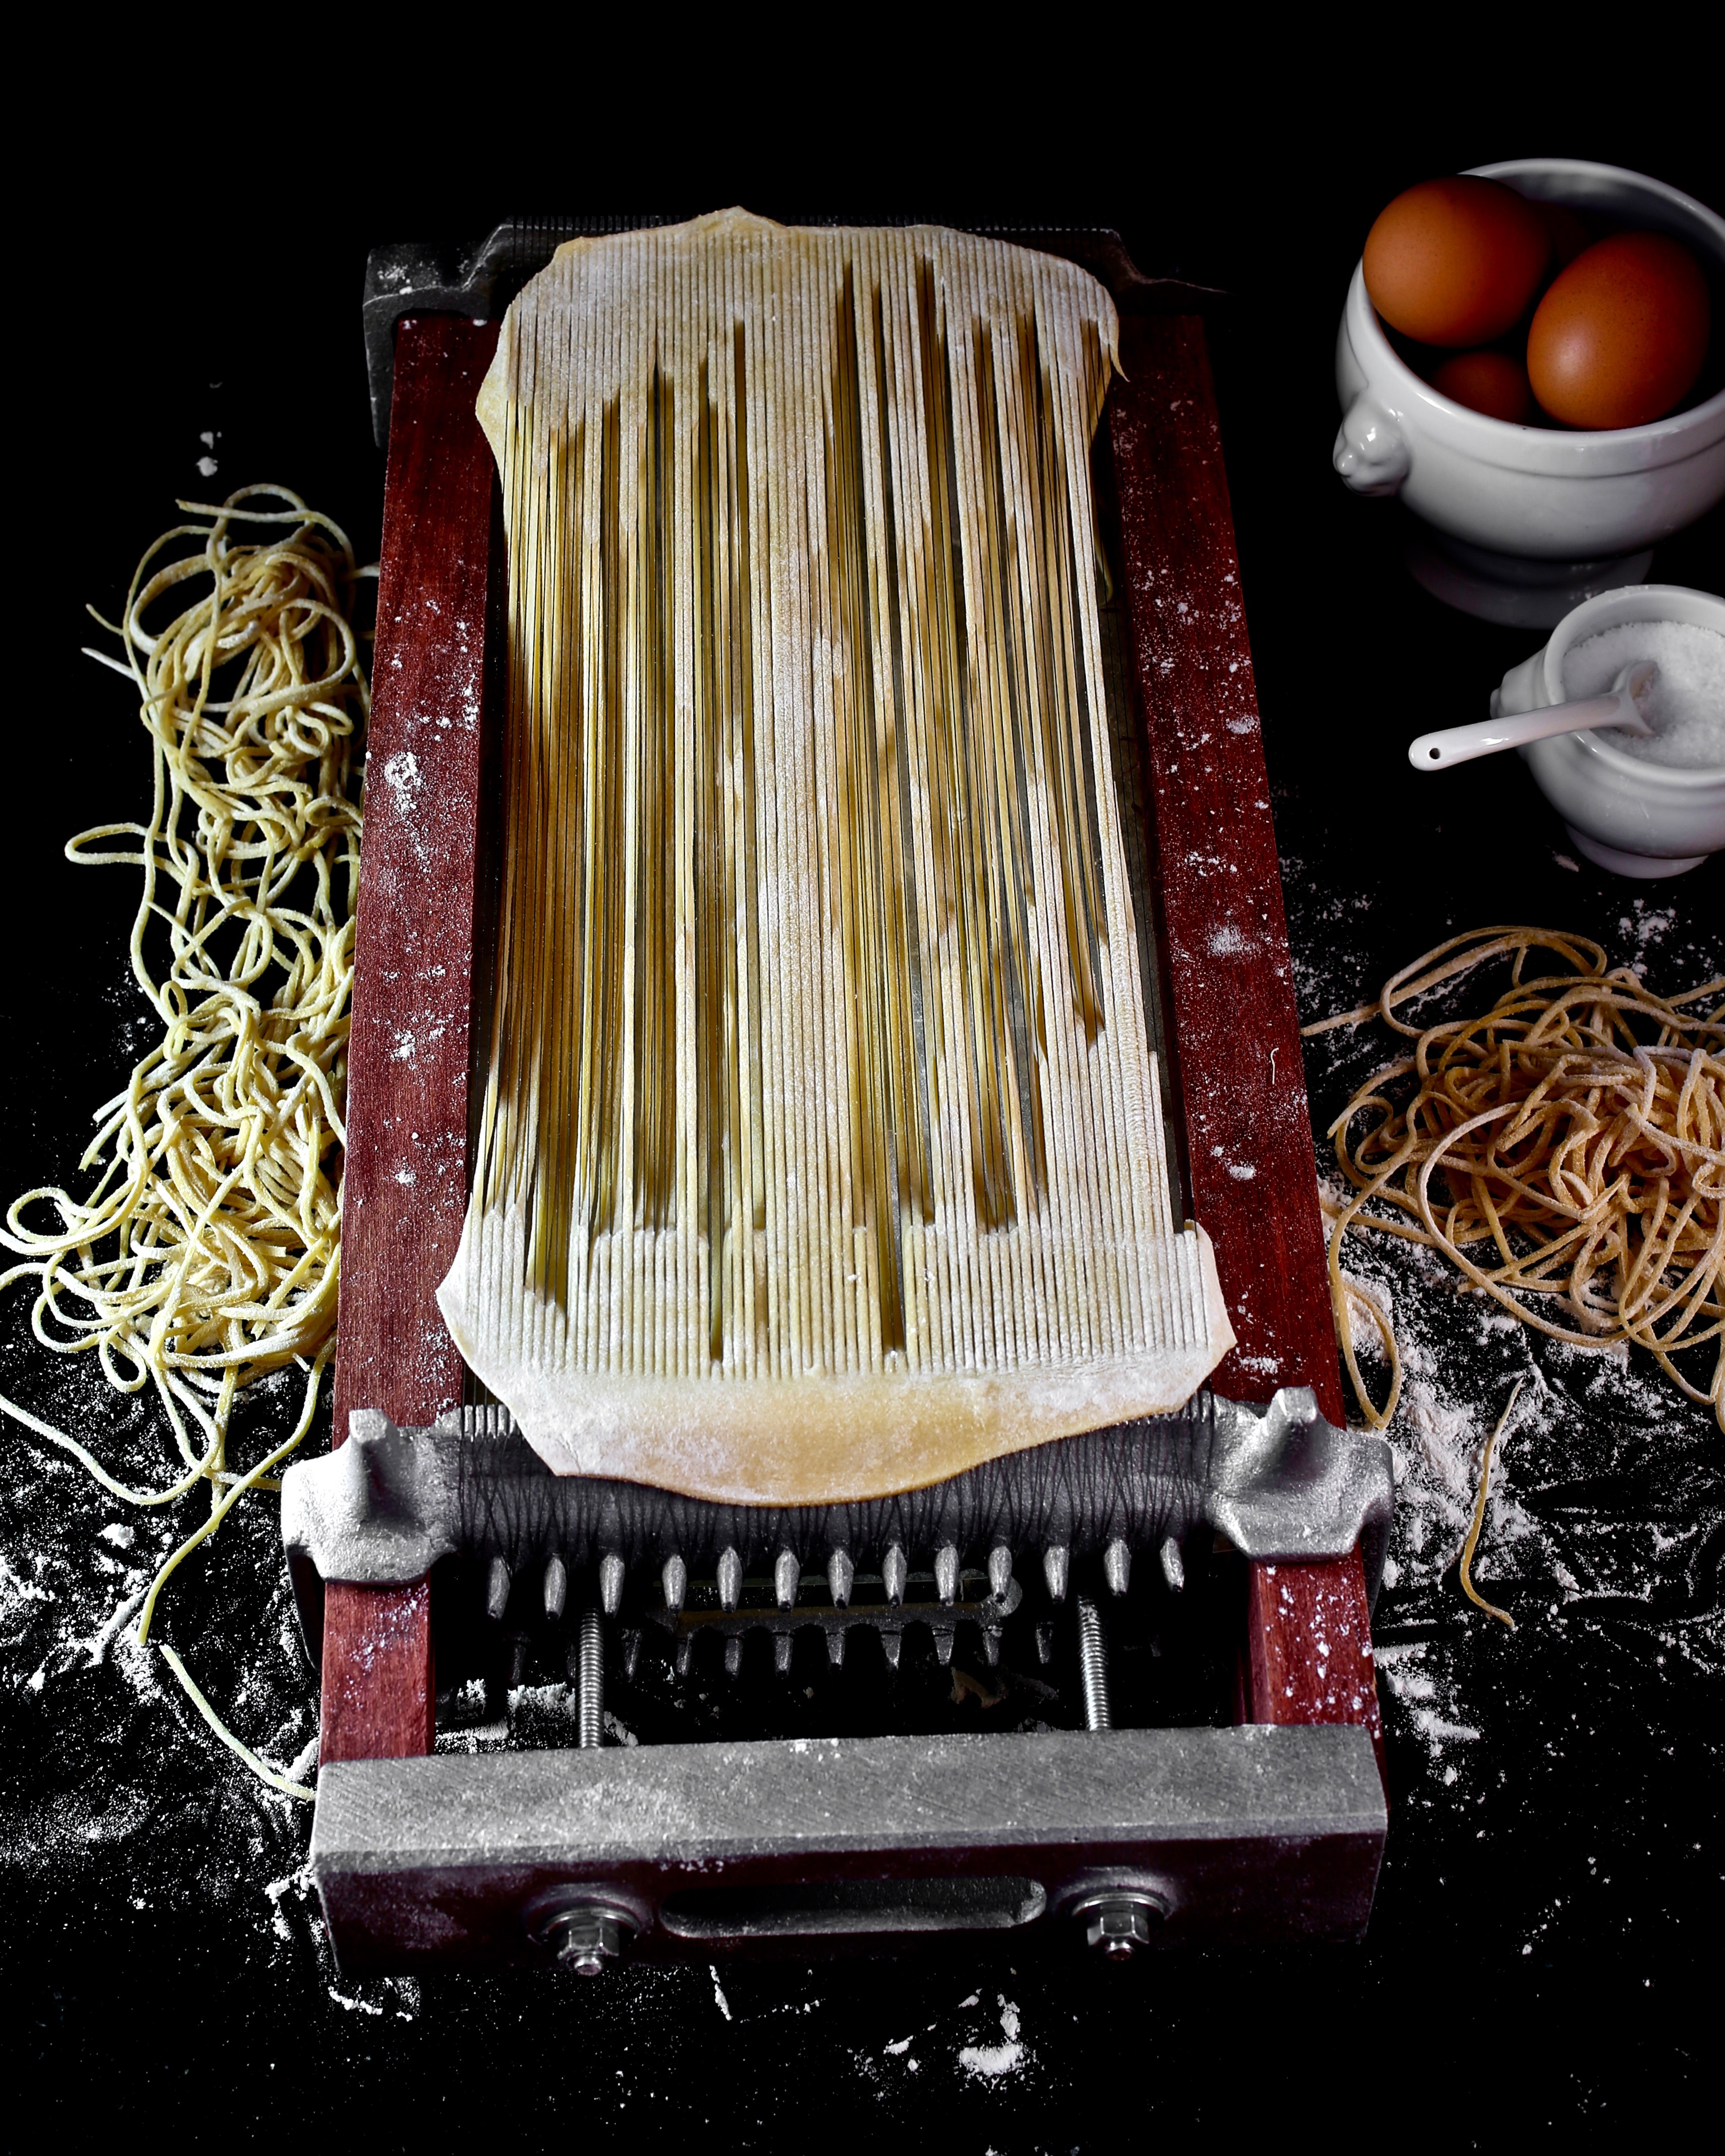 5+ Hundred Chitarra Pasta Royalty-Free Images, Stock Photos